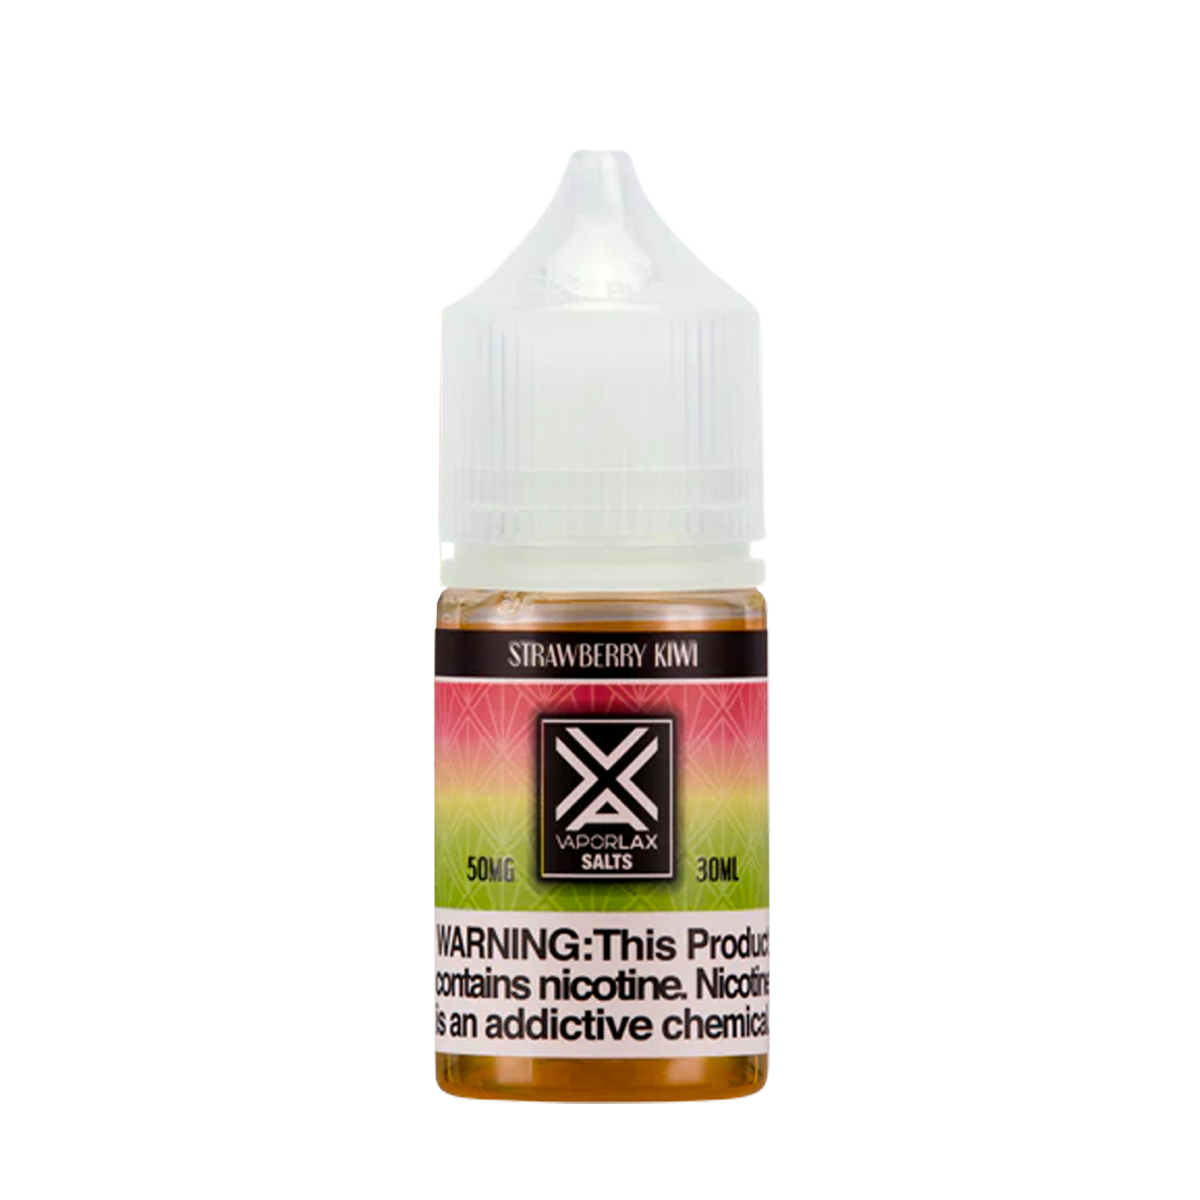 Vaporlax Salt Nicotine Vape Juice 50 Mg 30 Ml Strawberry Kiwi